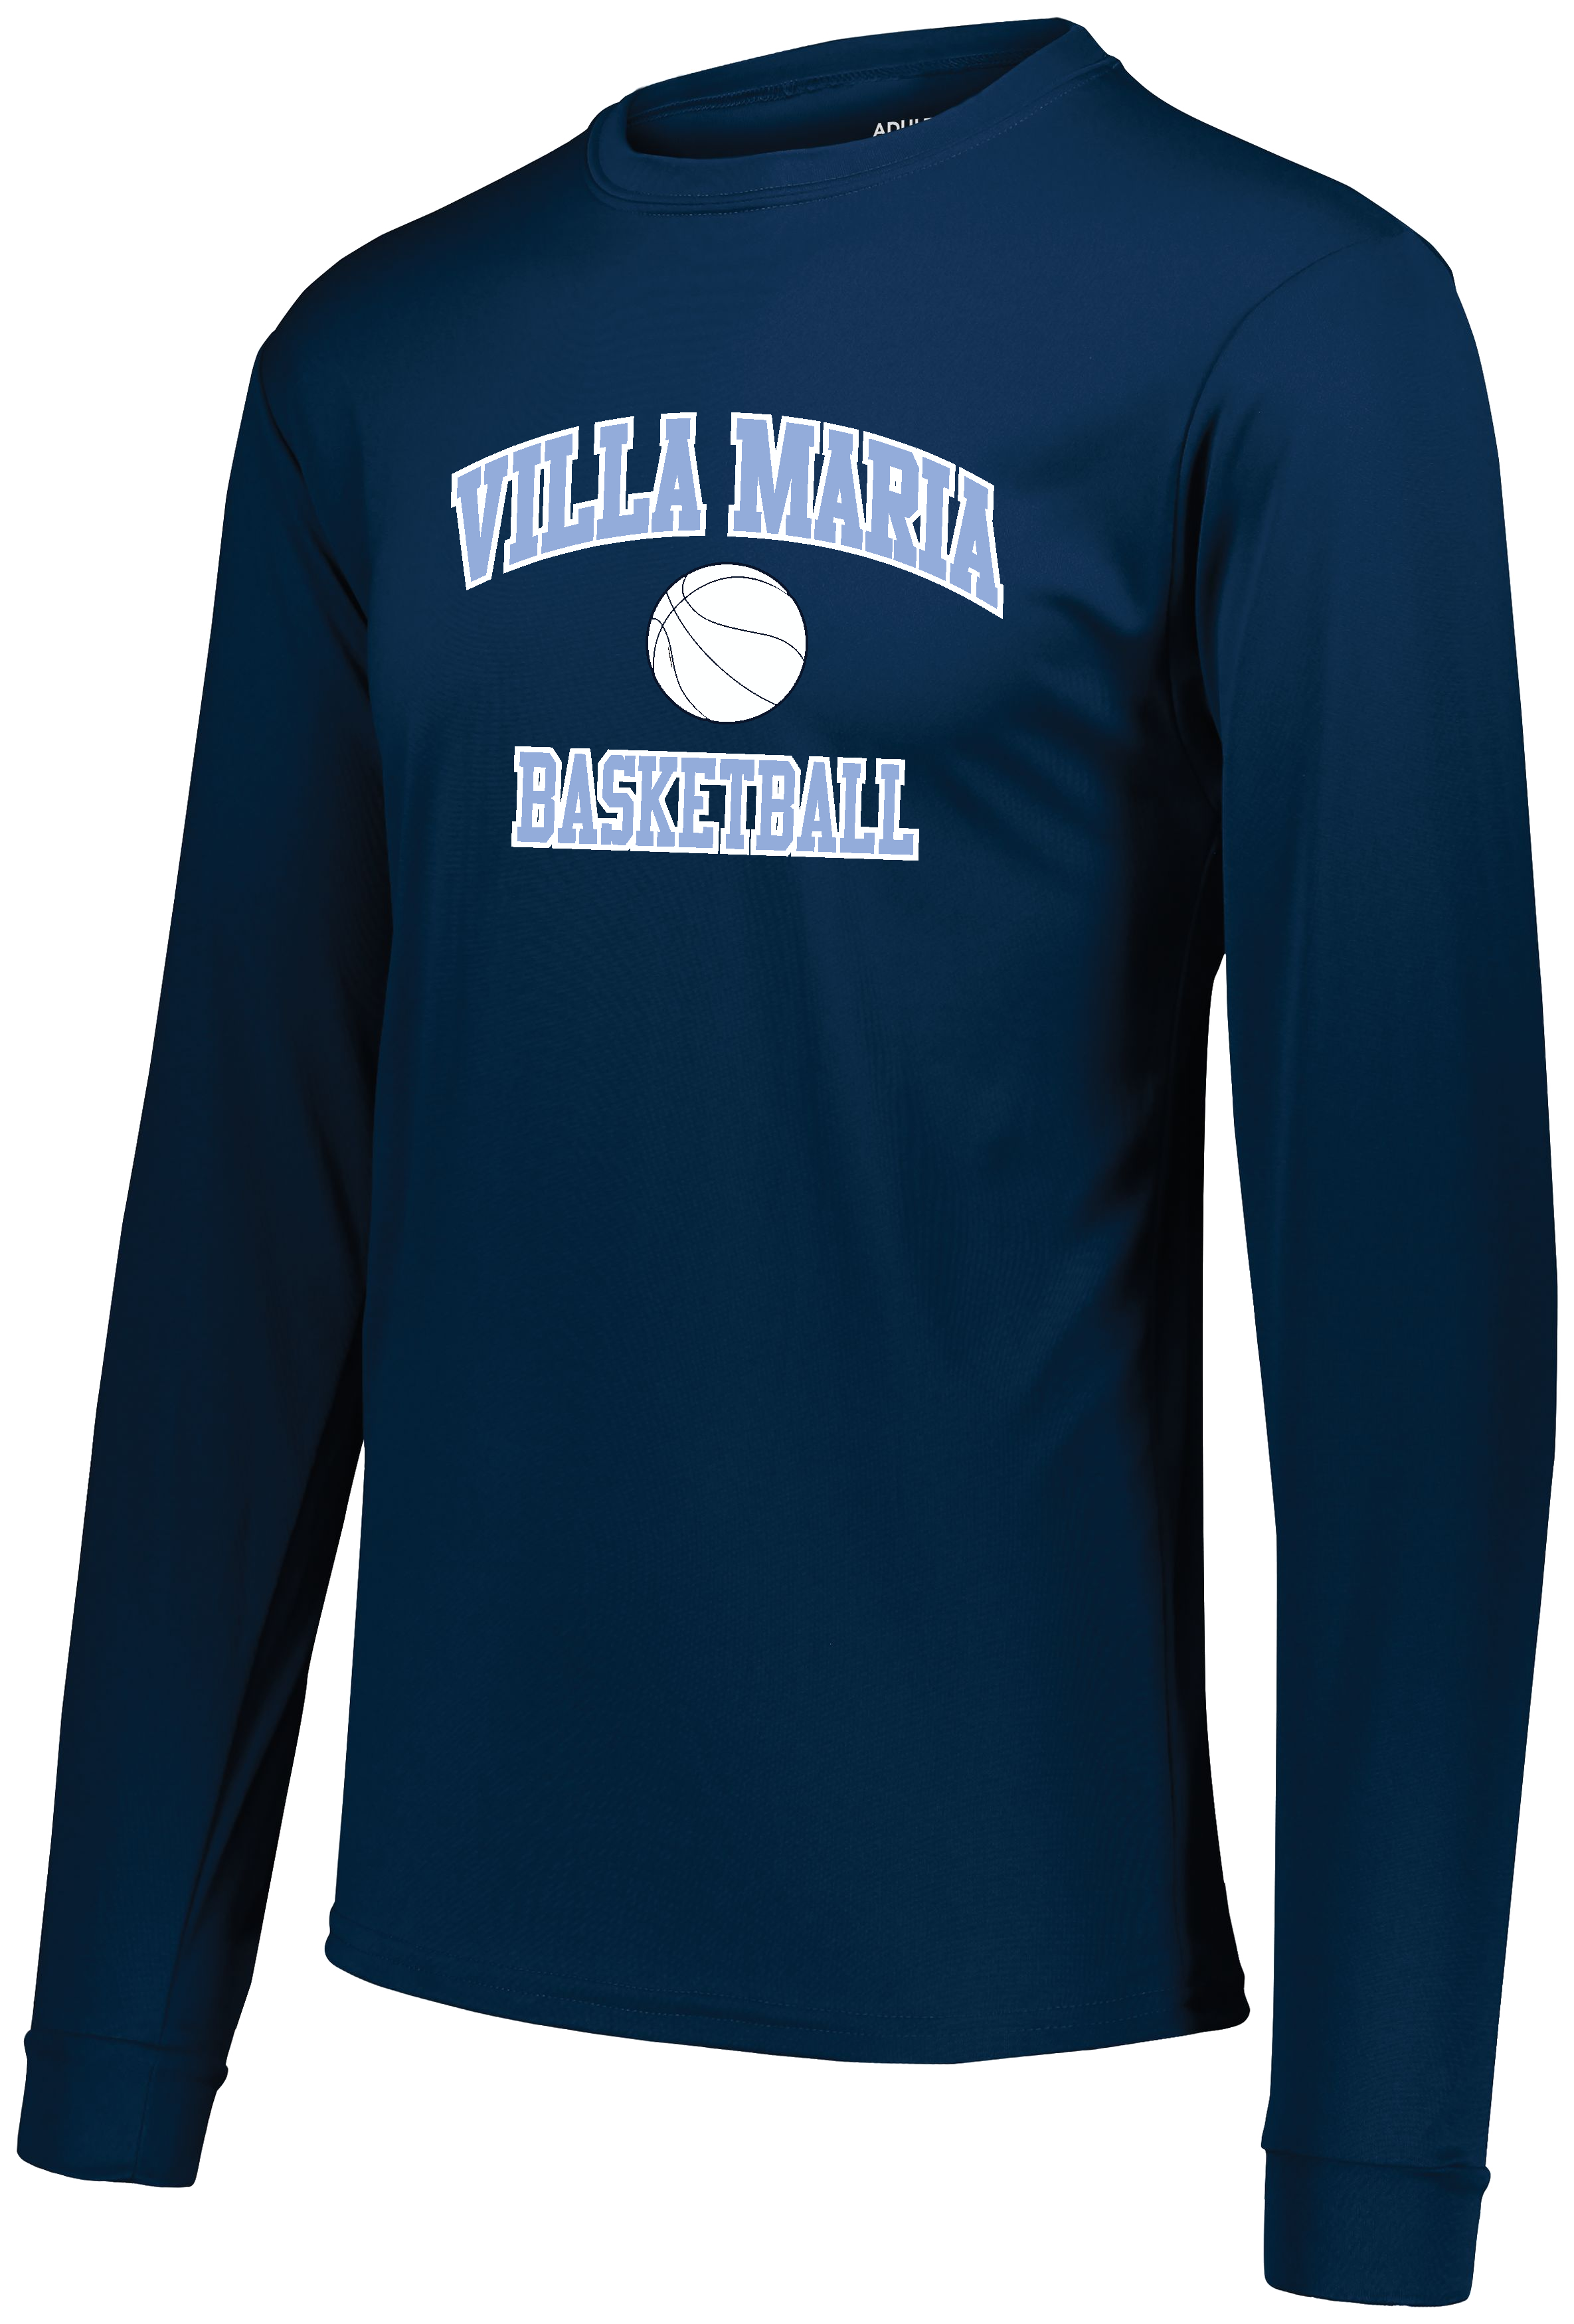 Villa Maria Basketball L/S T-Shirt -NAVY